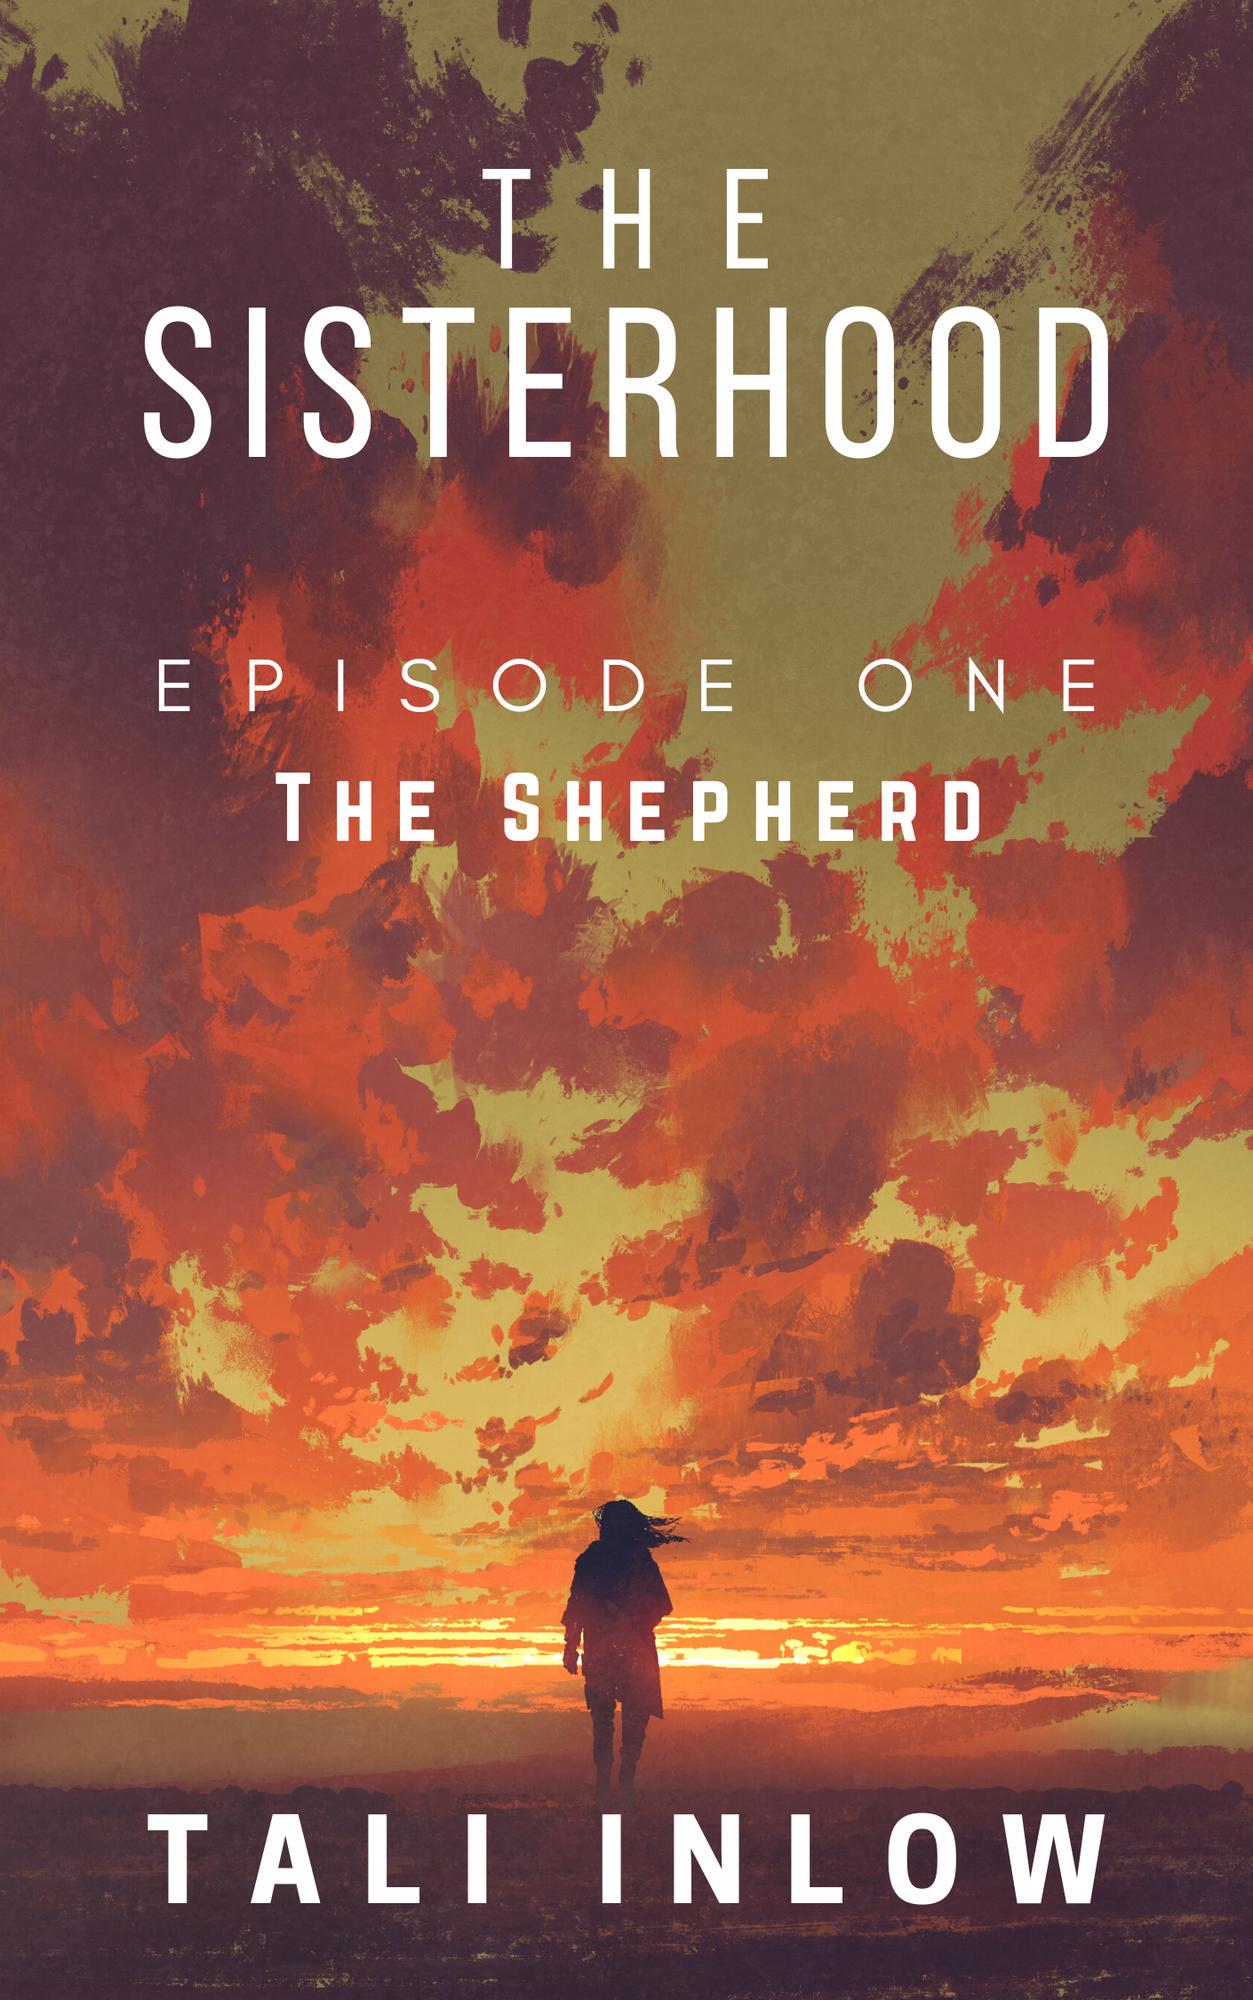 The Sisterhood by Tali Inlow